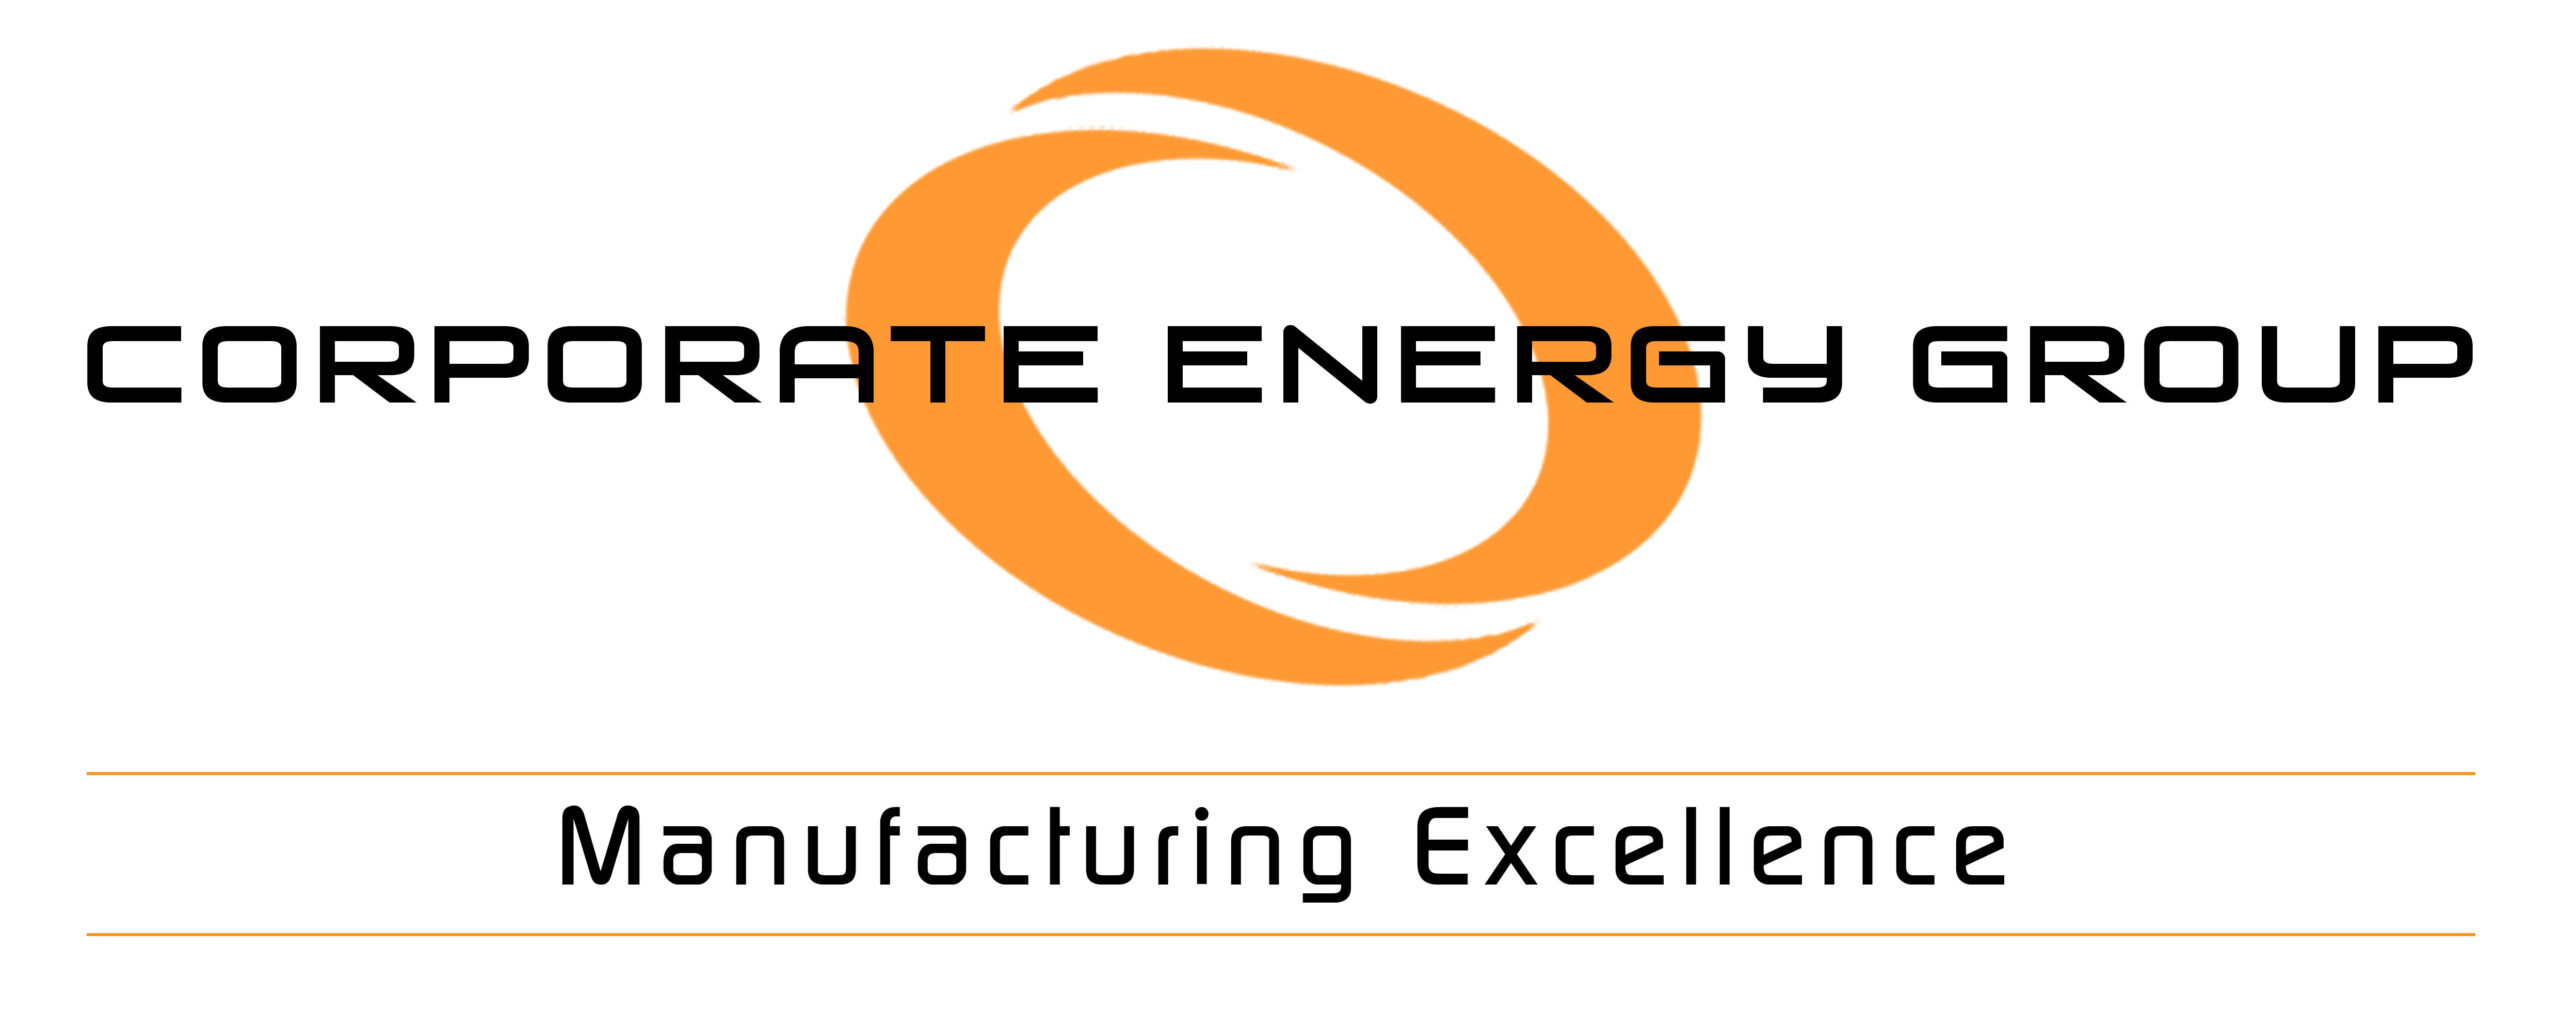 CEA logo and slogan